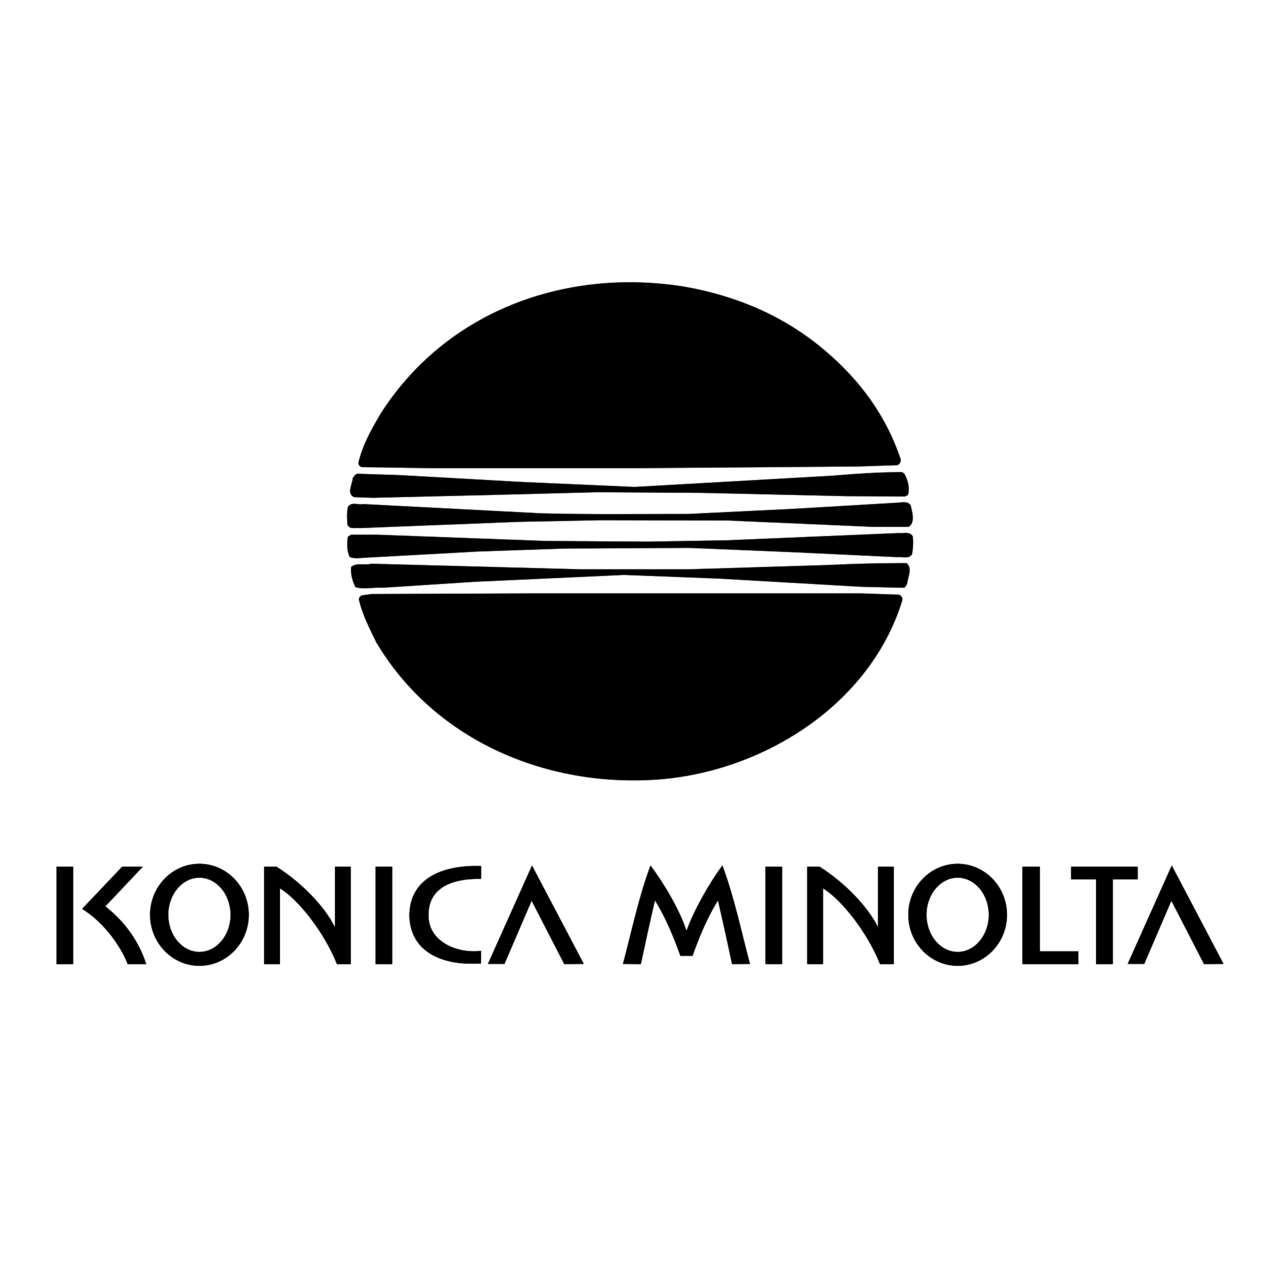 konica-minolta-logo-black-and-white